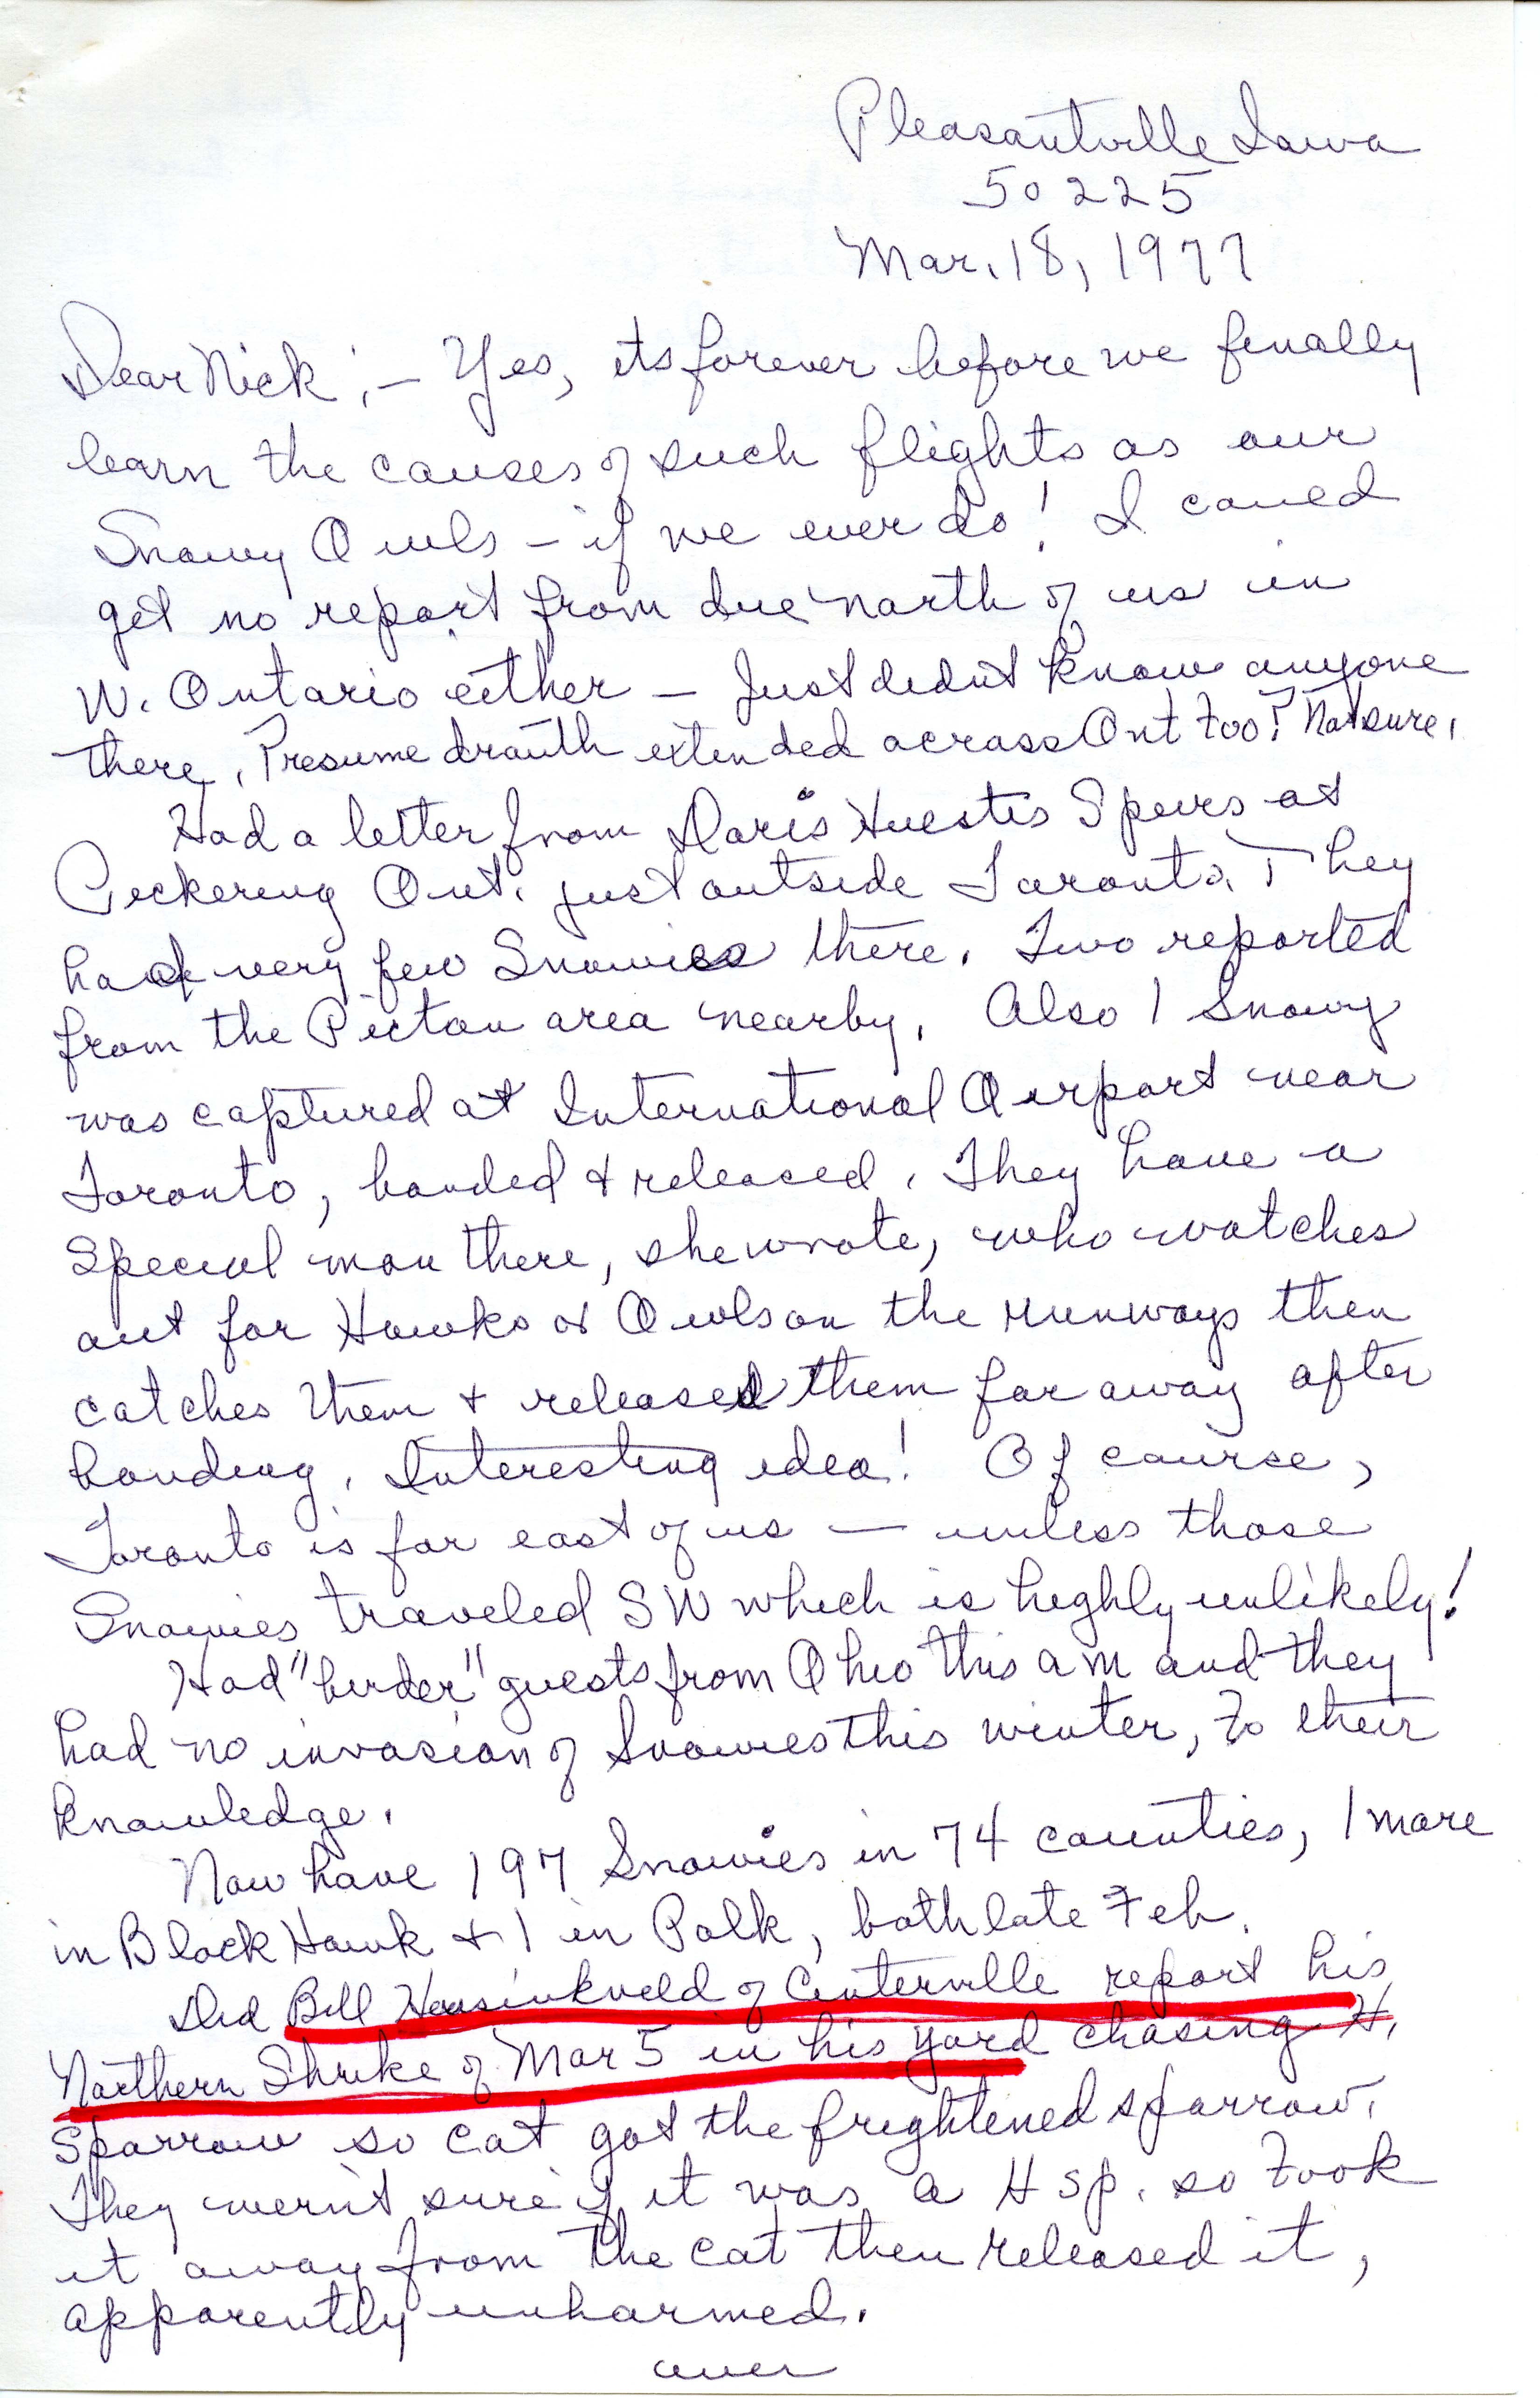 Gladys Black letter to Nicholas S. Halmi regarding bird sighting reports, March 18, 1977